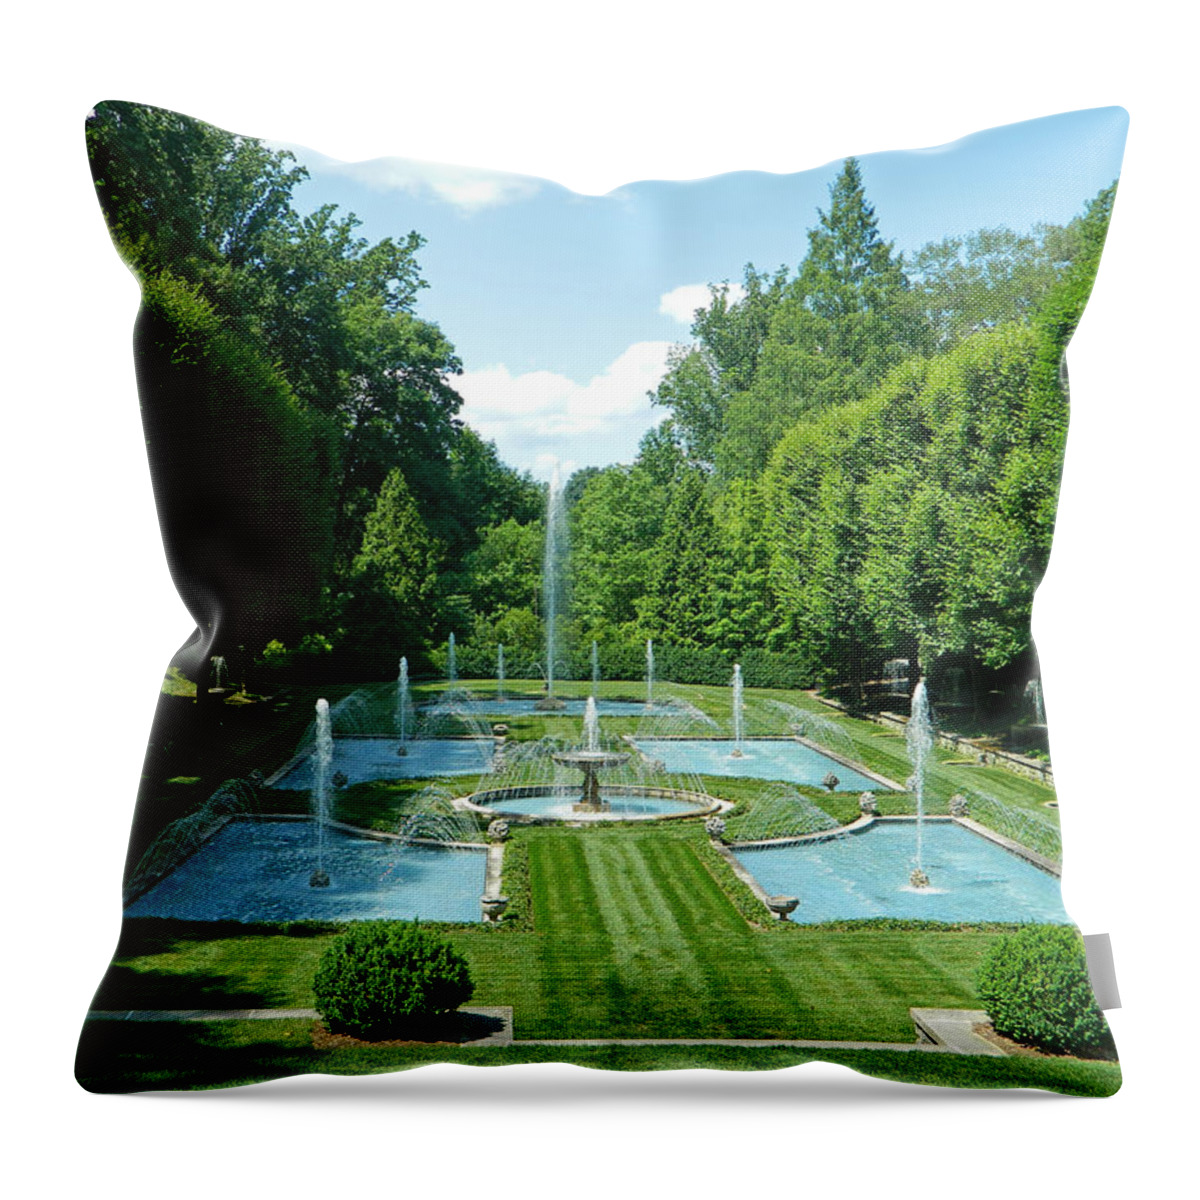 Italian Water Garden Throw Pillow featuring the photograph Italian Water Garden by Emmy Vickers